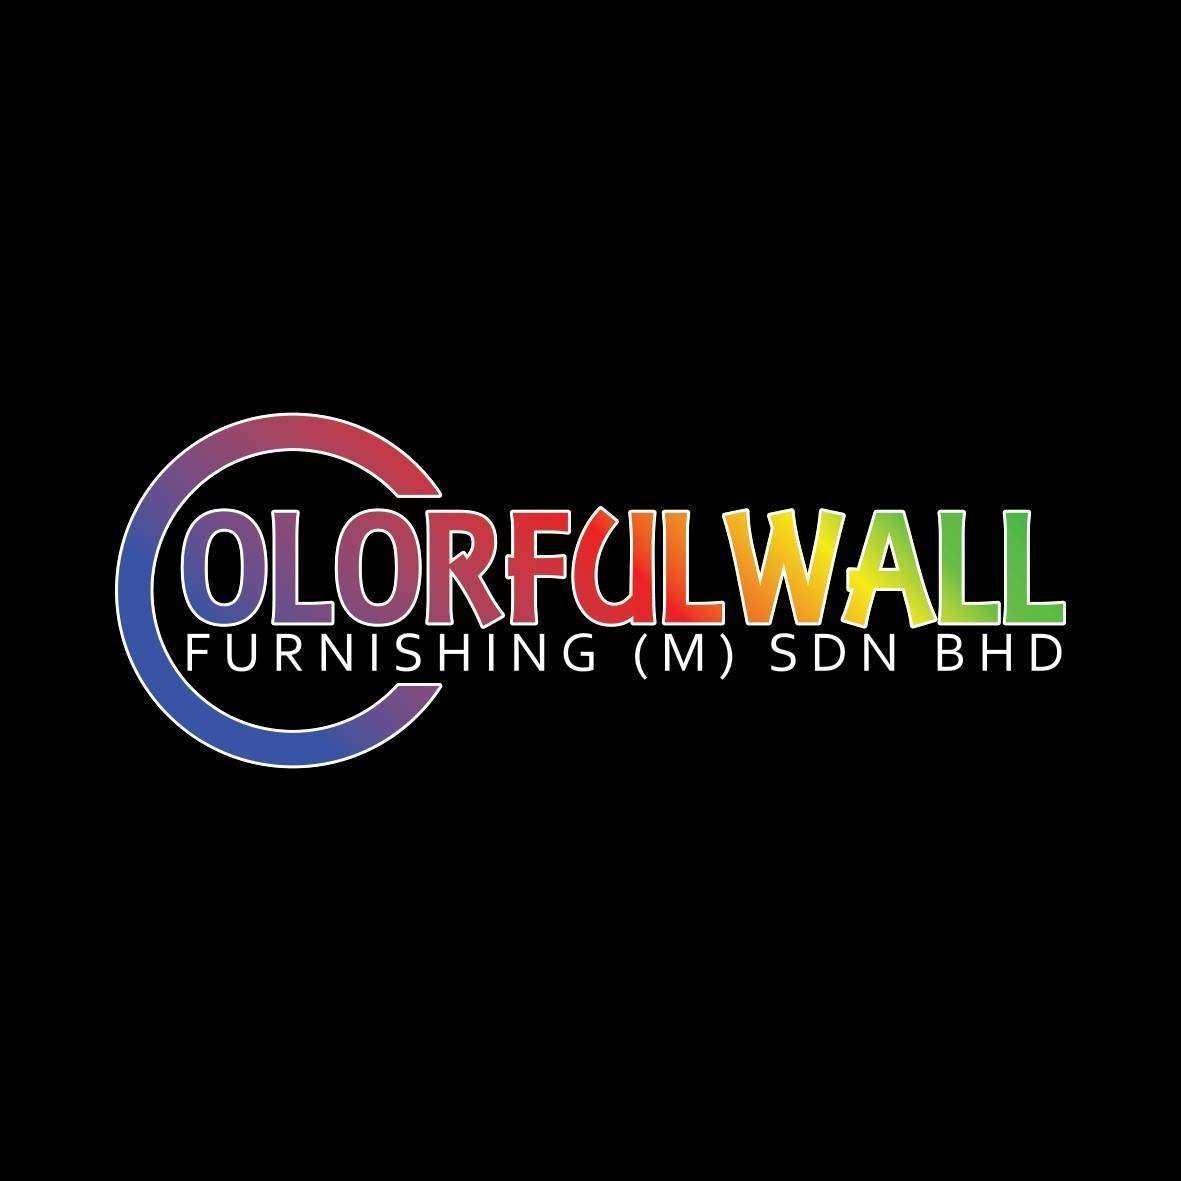 Colorfulwall Furnishing (M) Sdn Bhd